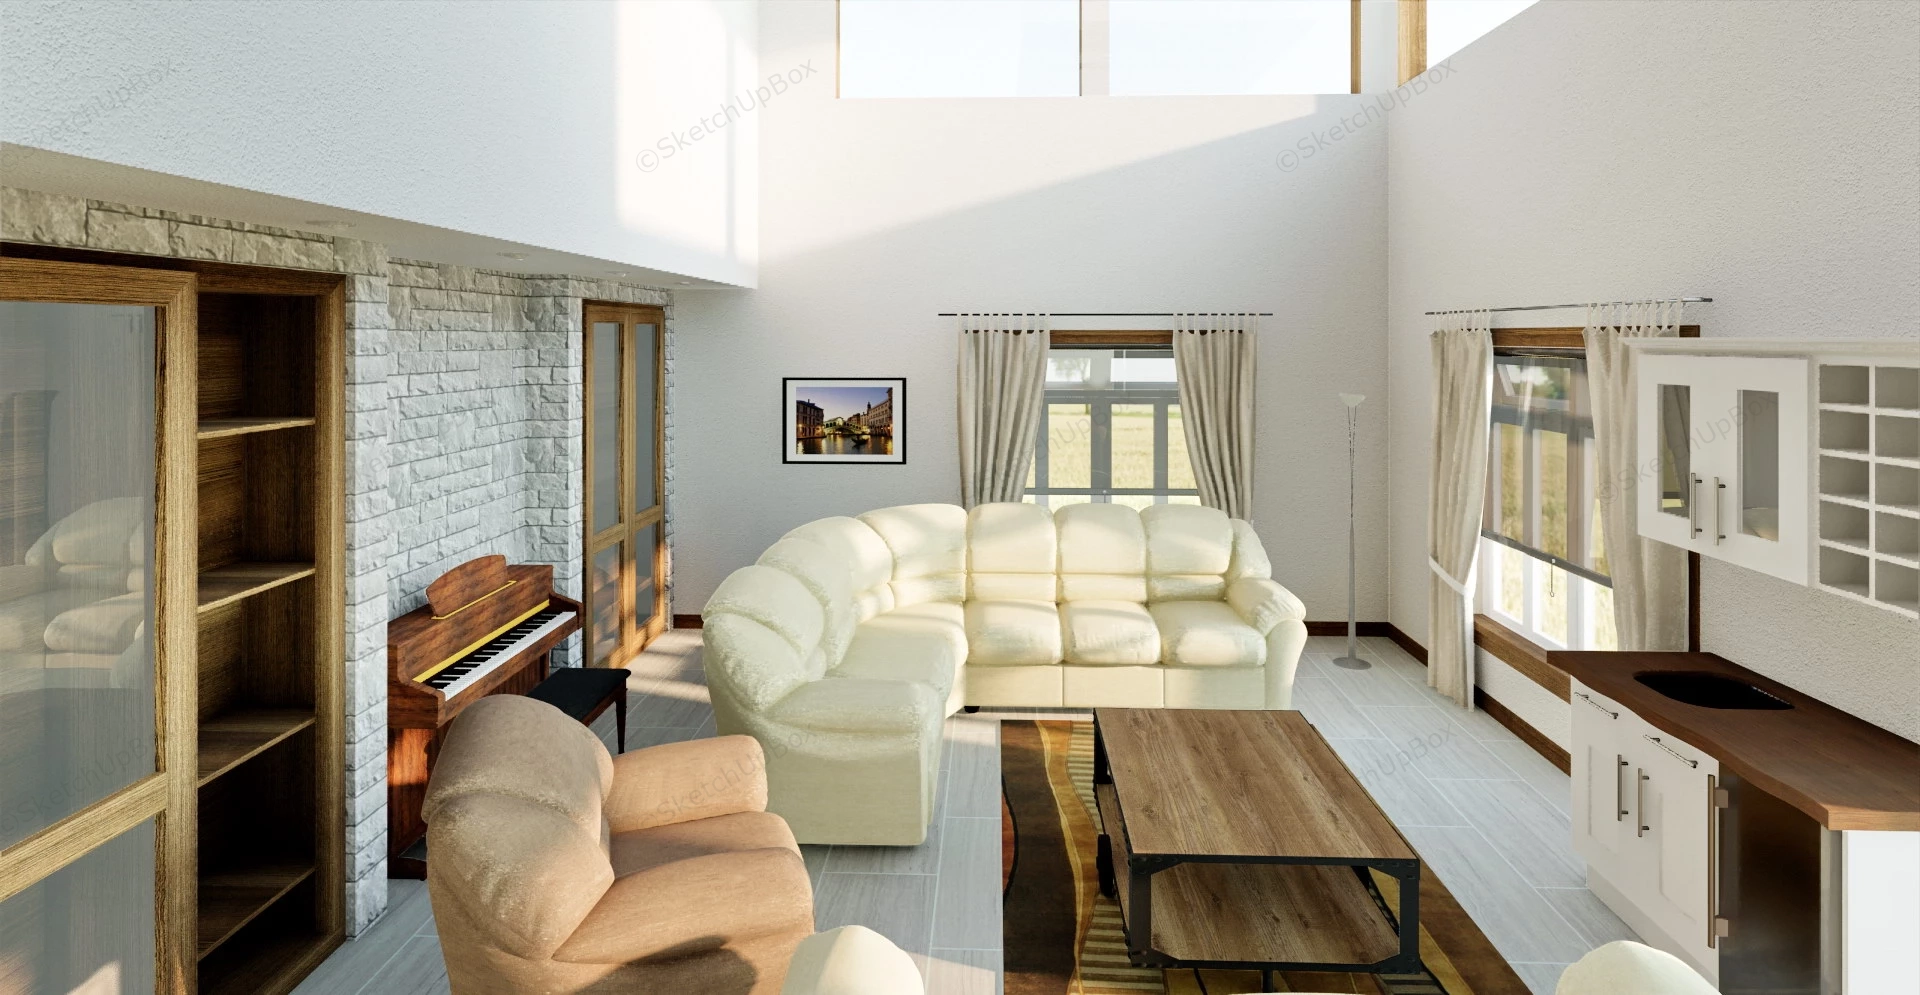 Farmhouse Living Room Design sketchup model preview - SketchupBox